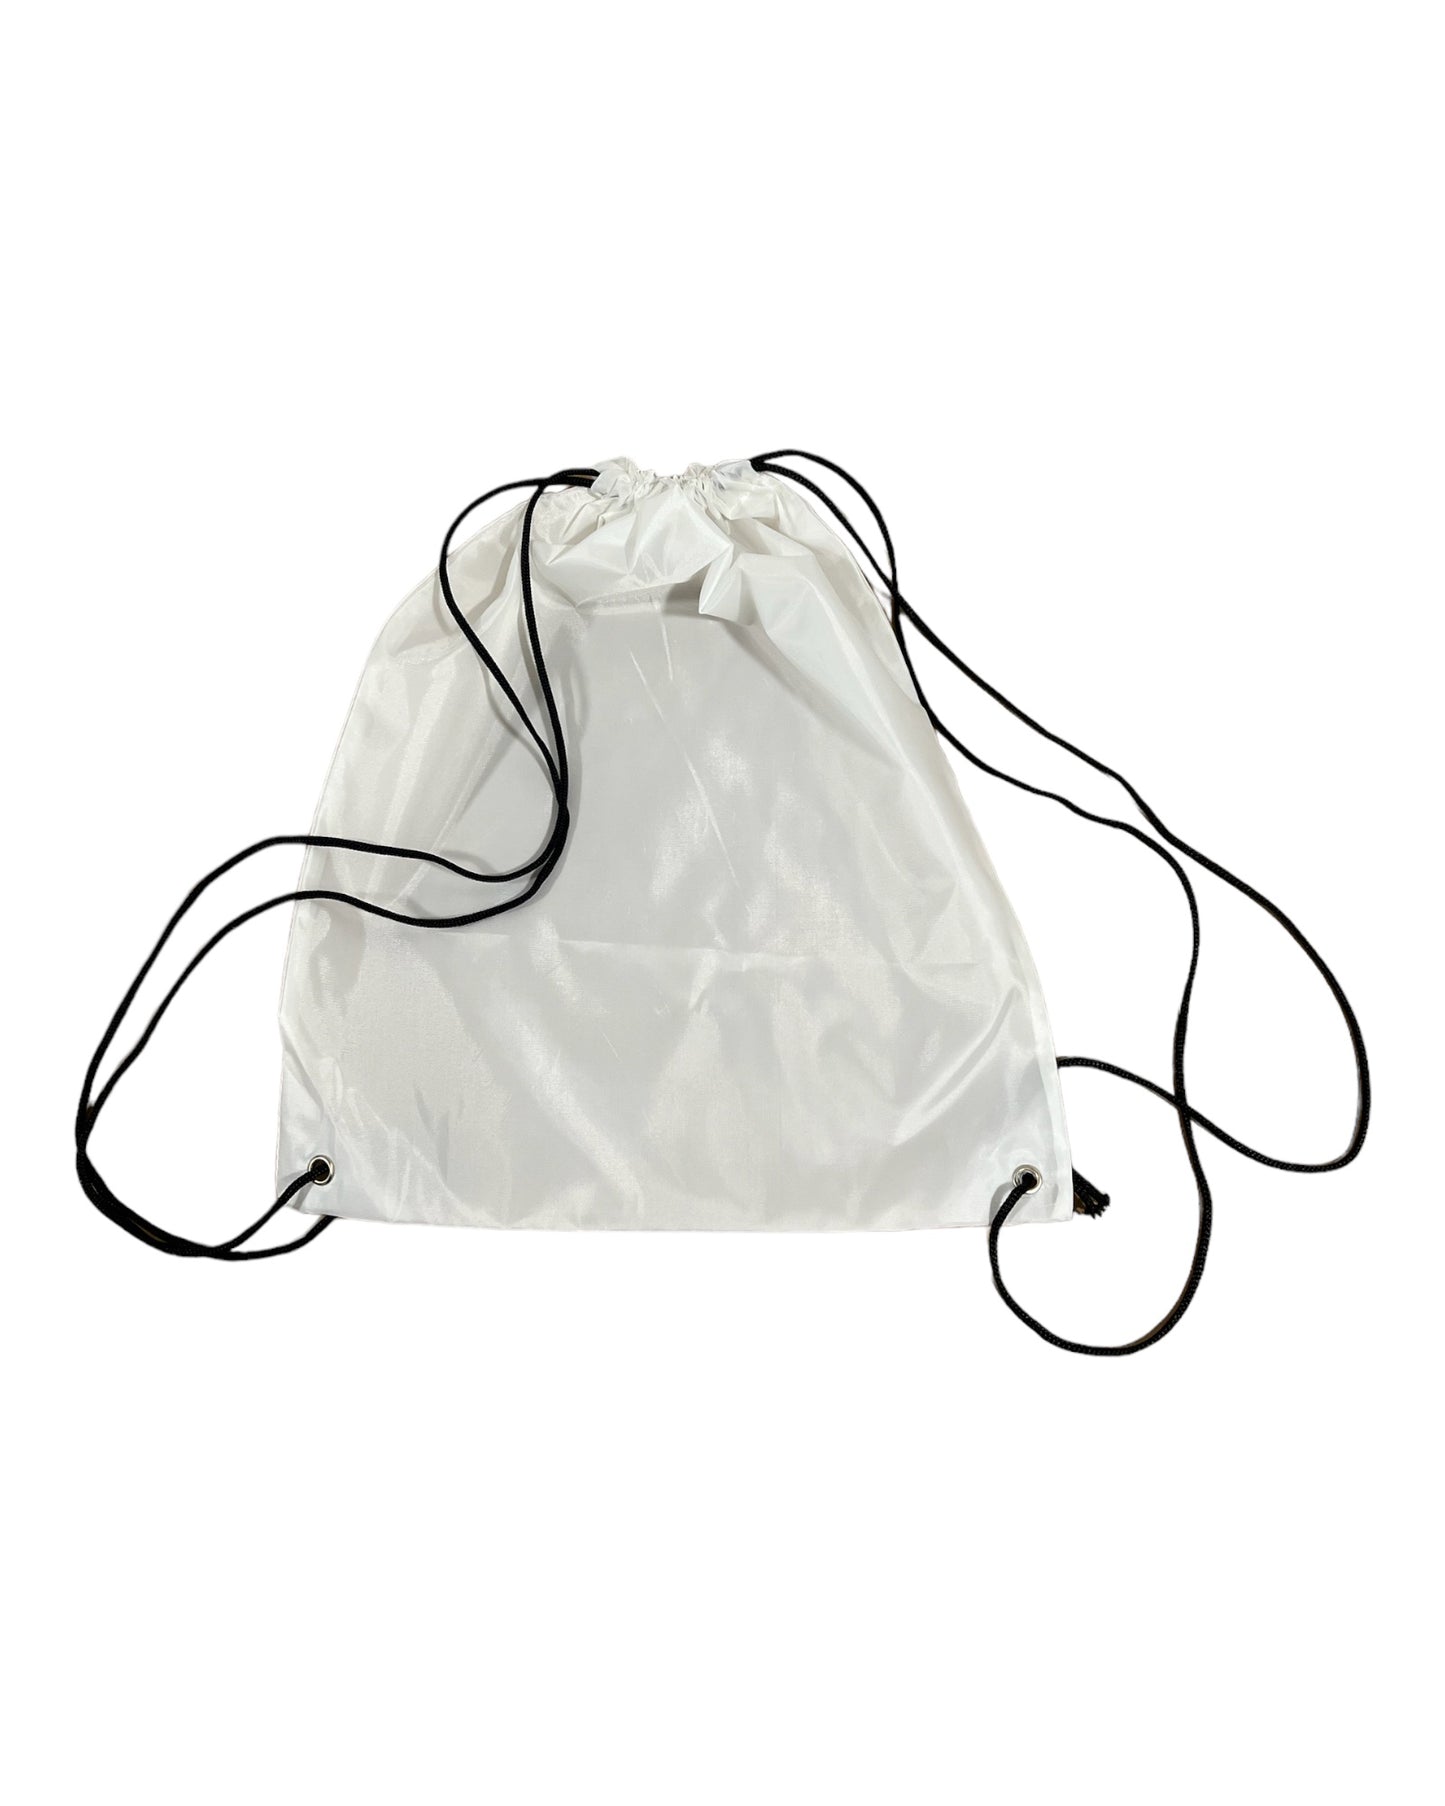 Backpack bag in white, sublimation